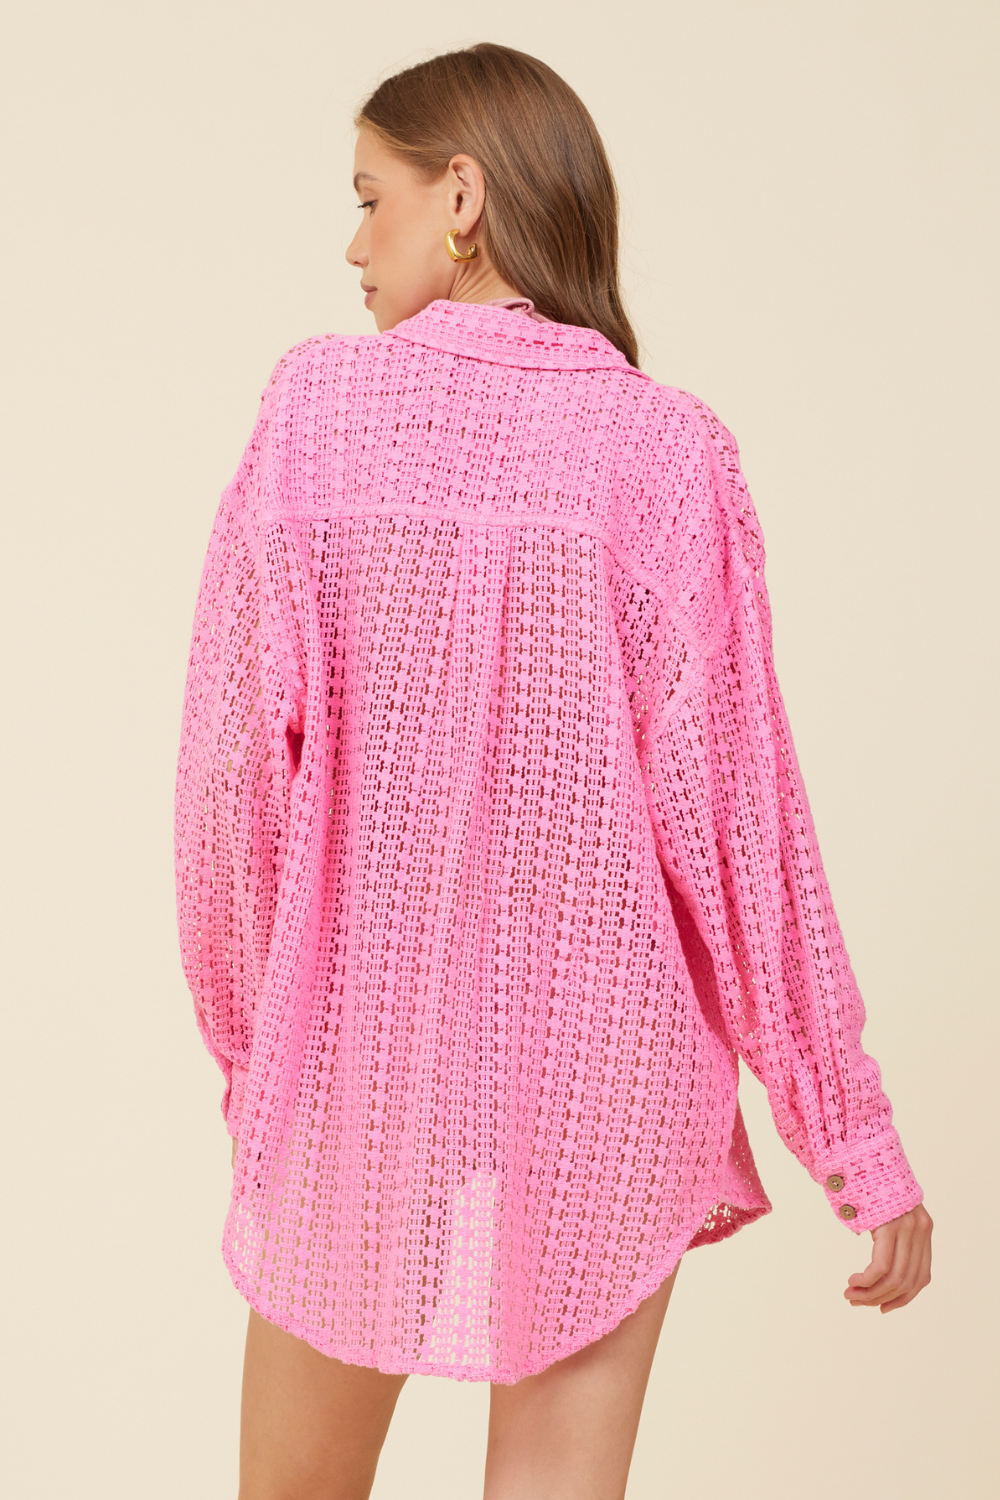 Long Sleeve Button-Down Coverup Shirt - Hot Pink